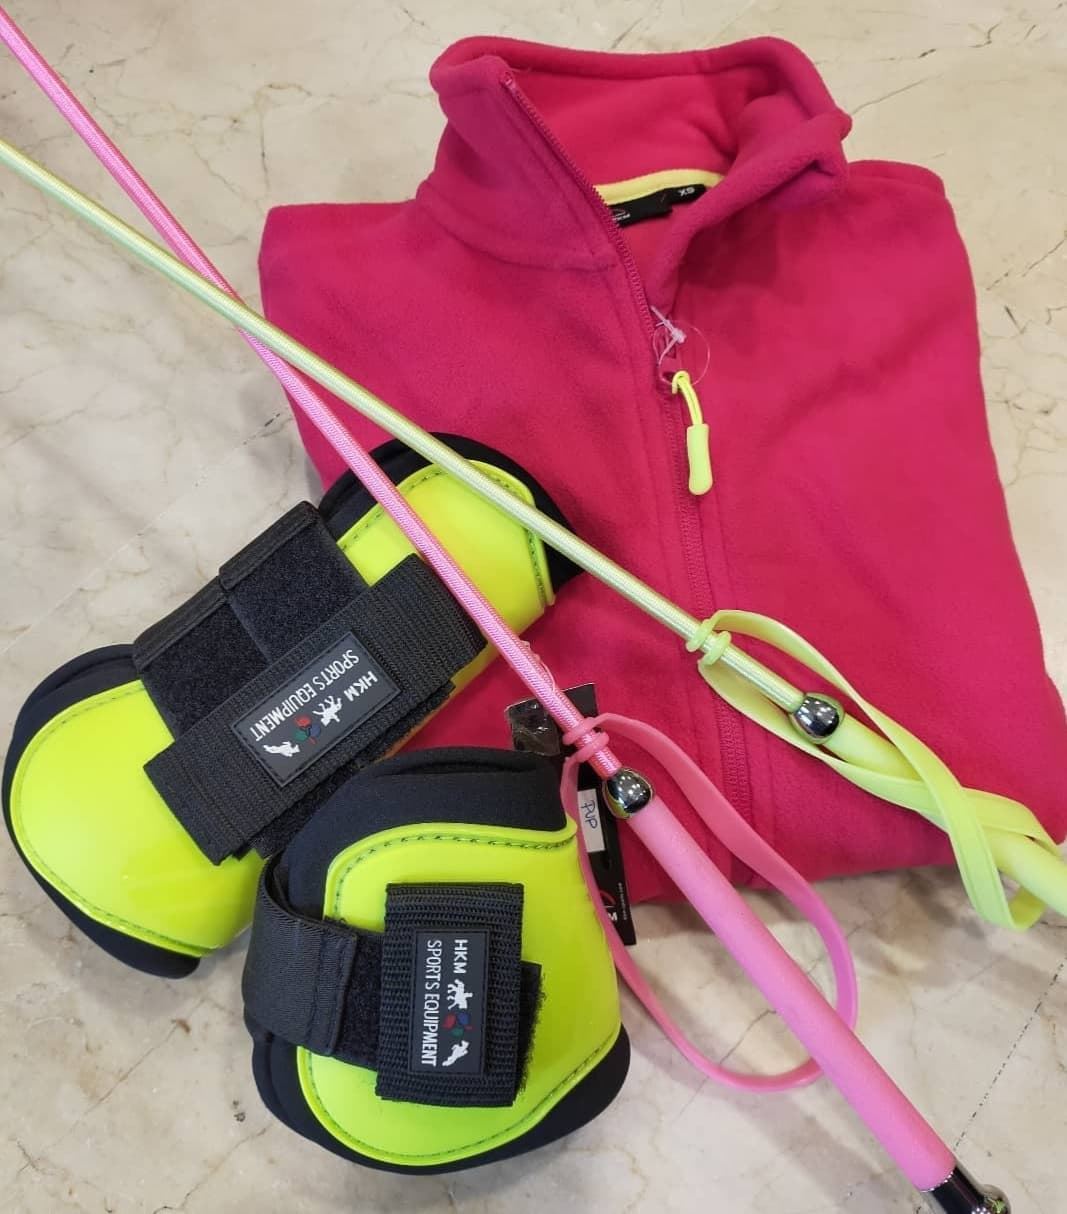 Protectores HKM Sports Equipment, juego 4 unidades, color amarillo neón, talla PONY - Imagen 2